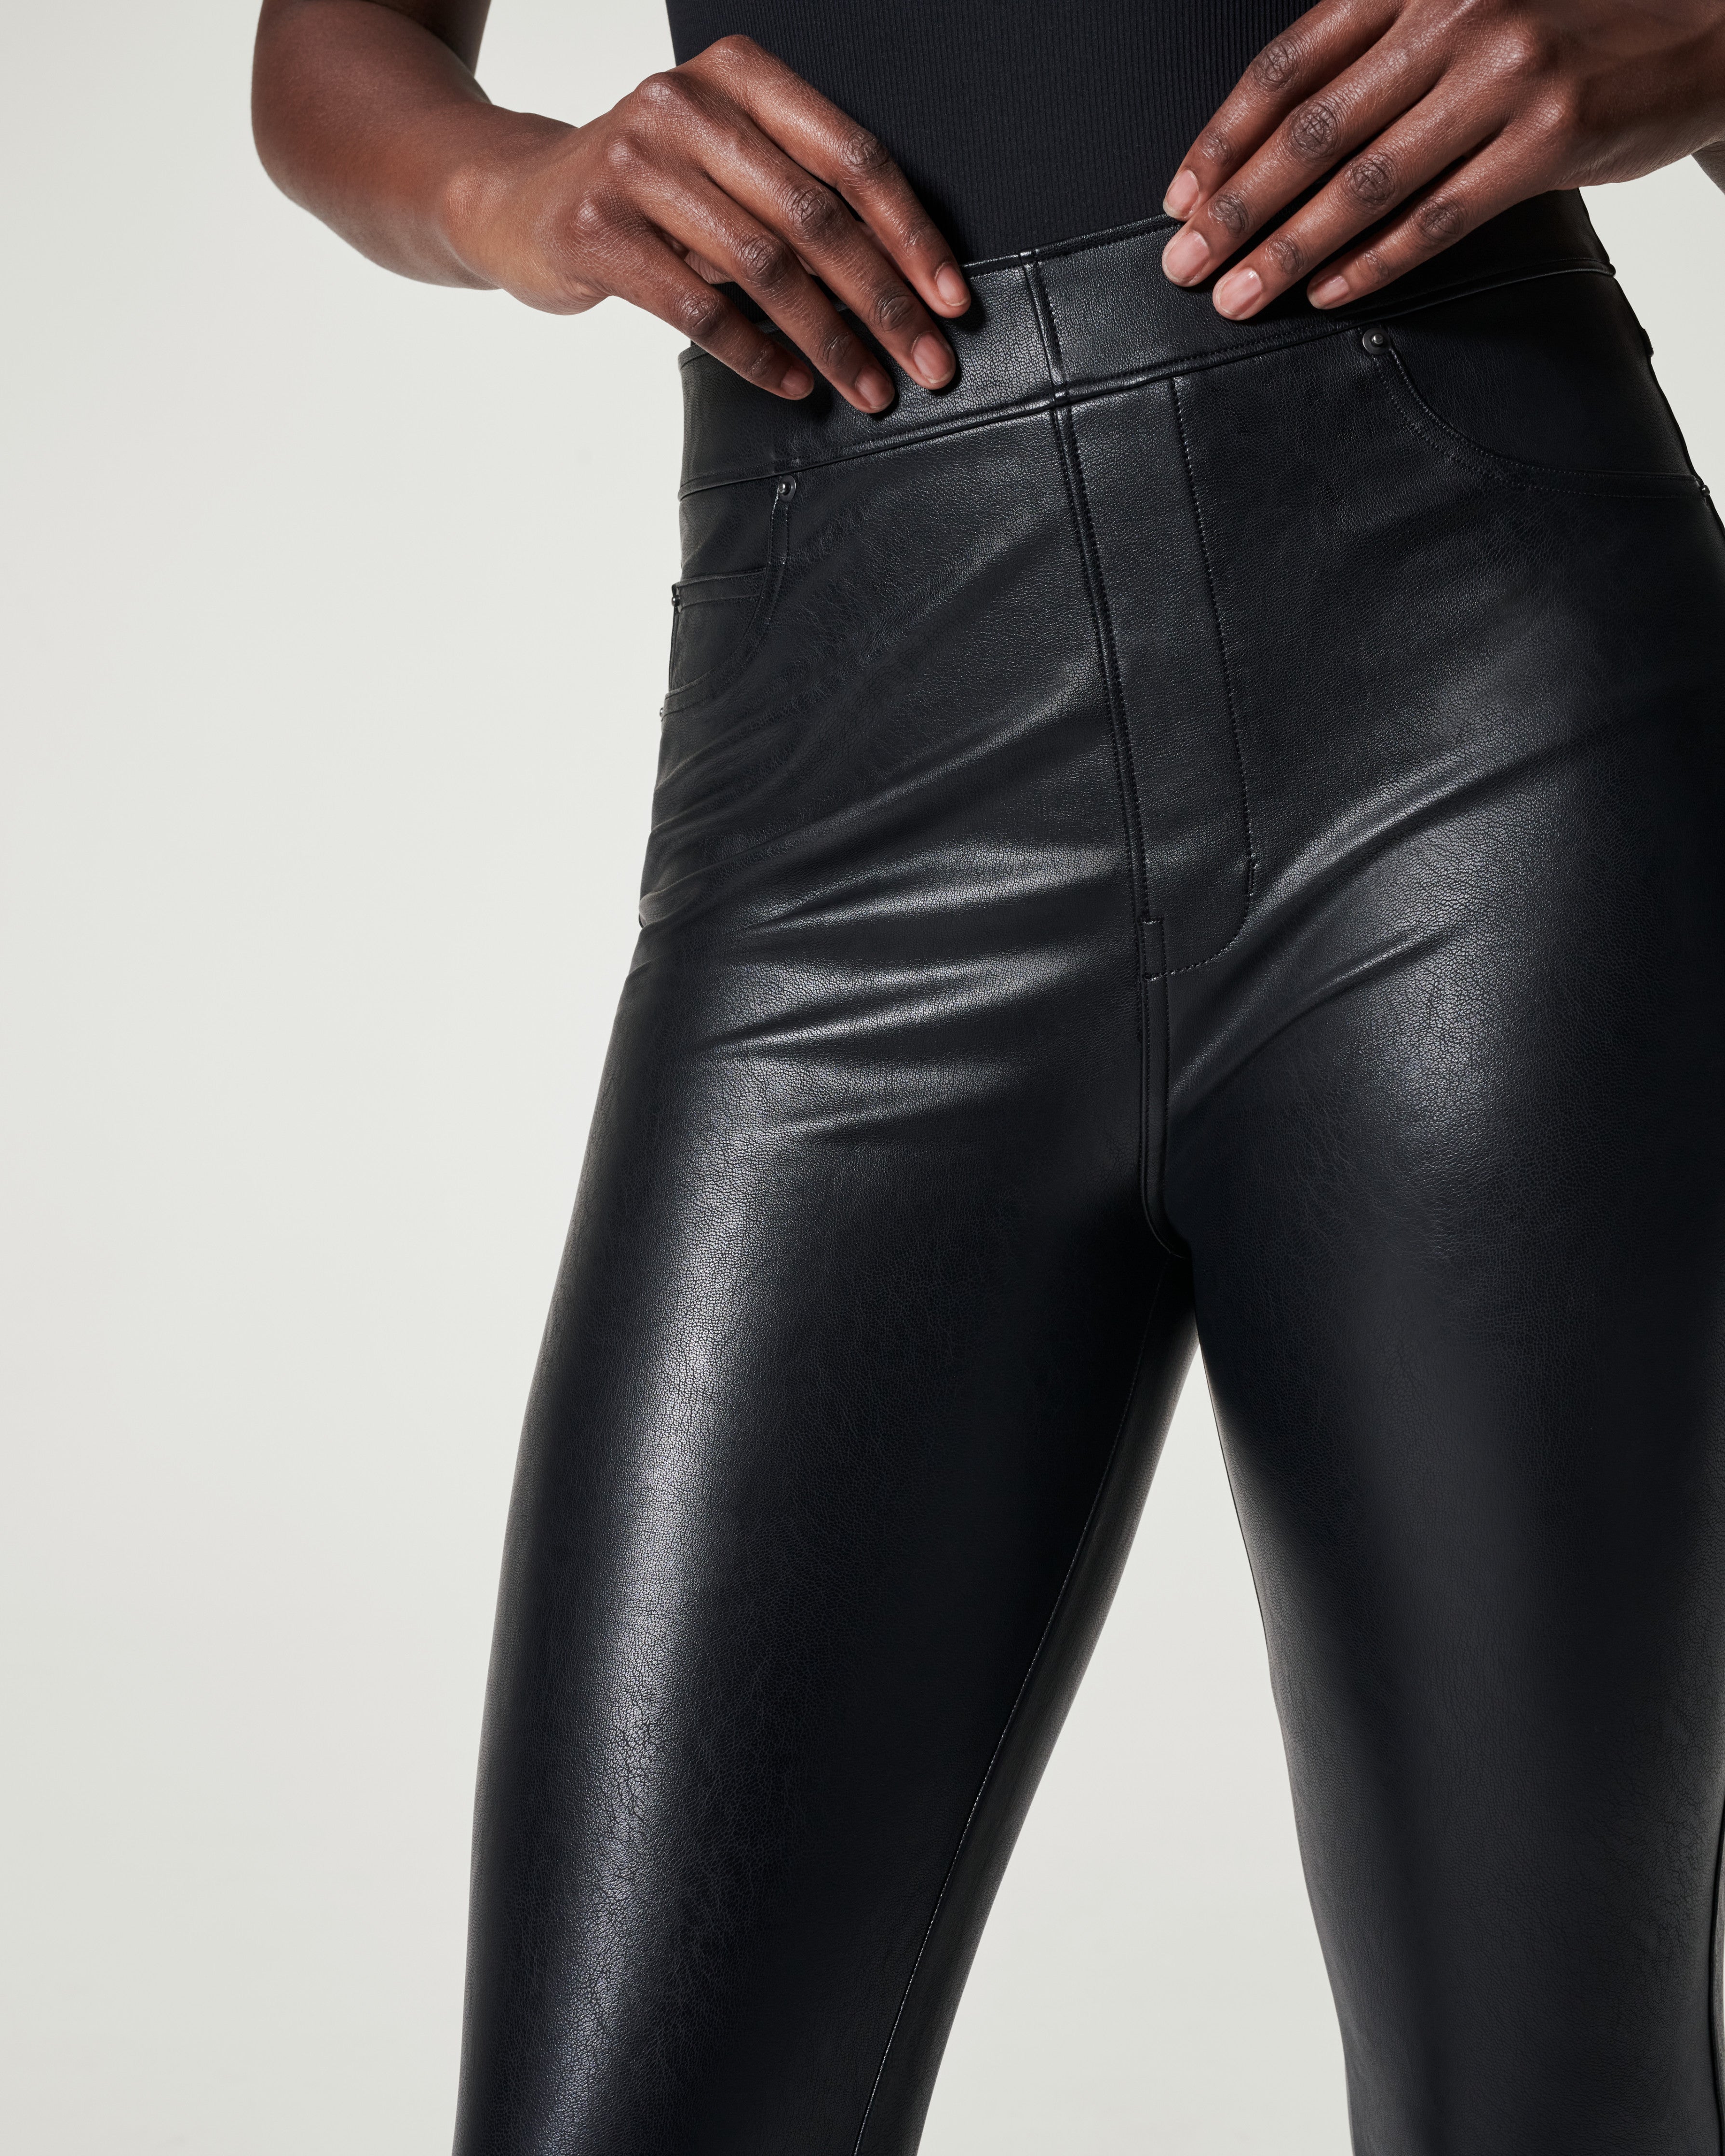 SPANX Snake Print Black Faux Leather Pants Size 1X (Plus) - 47% off